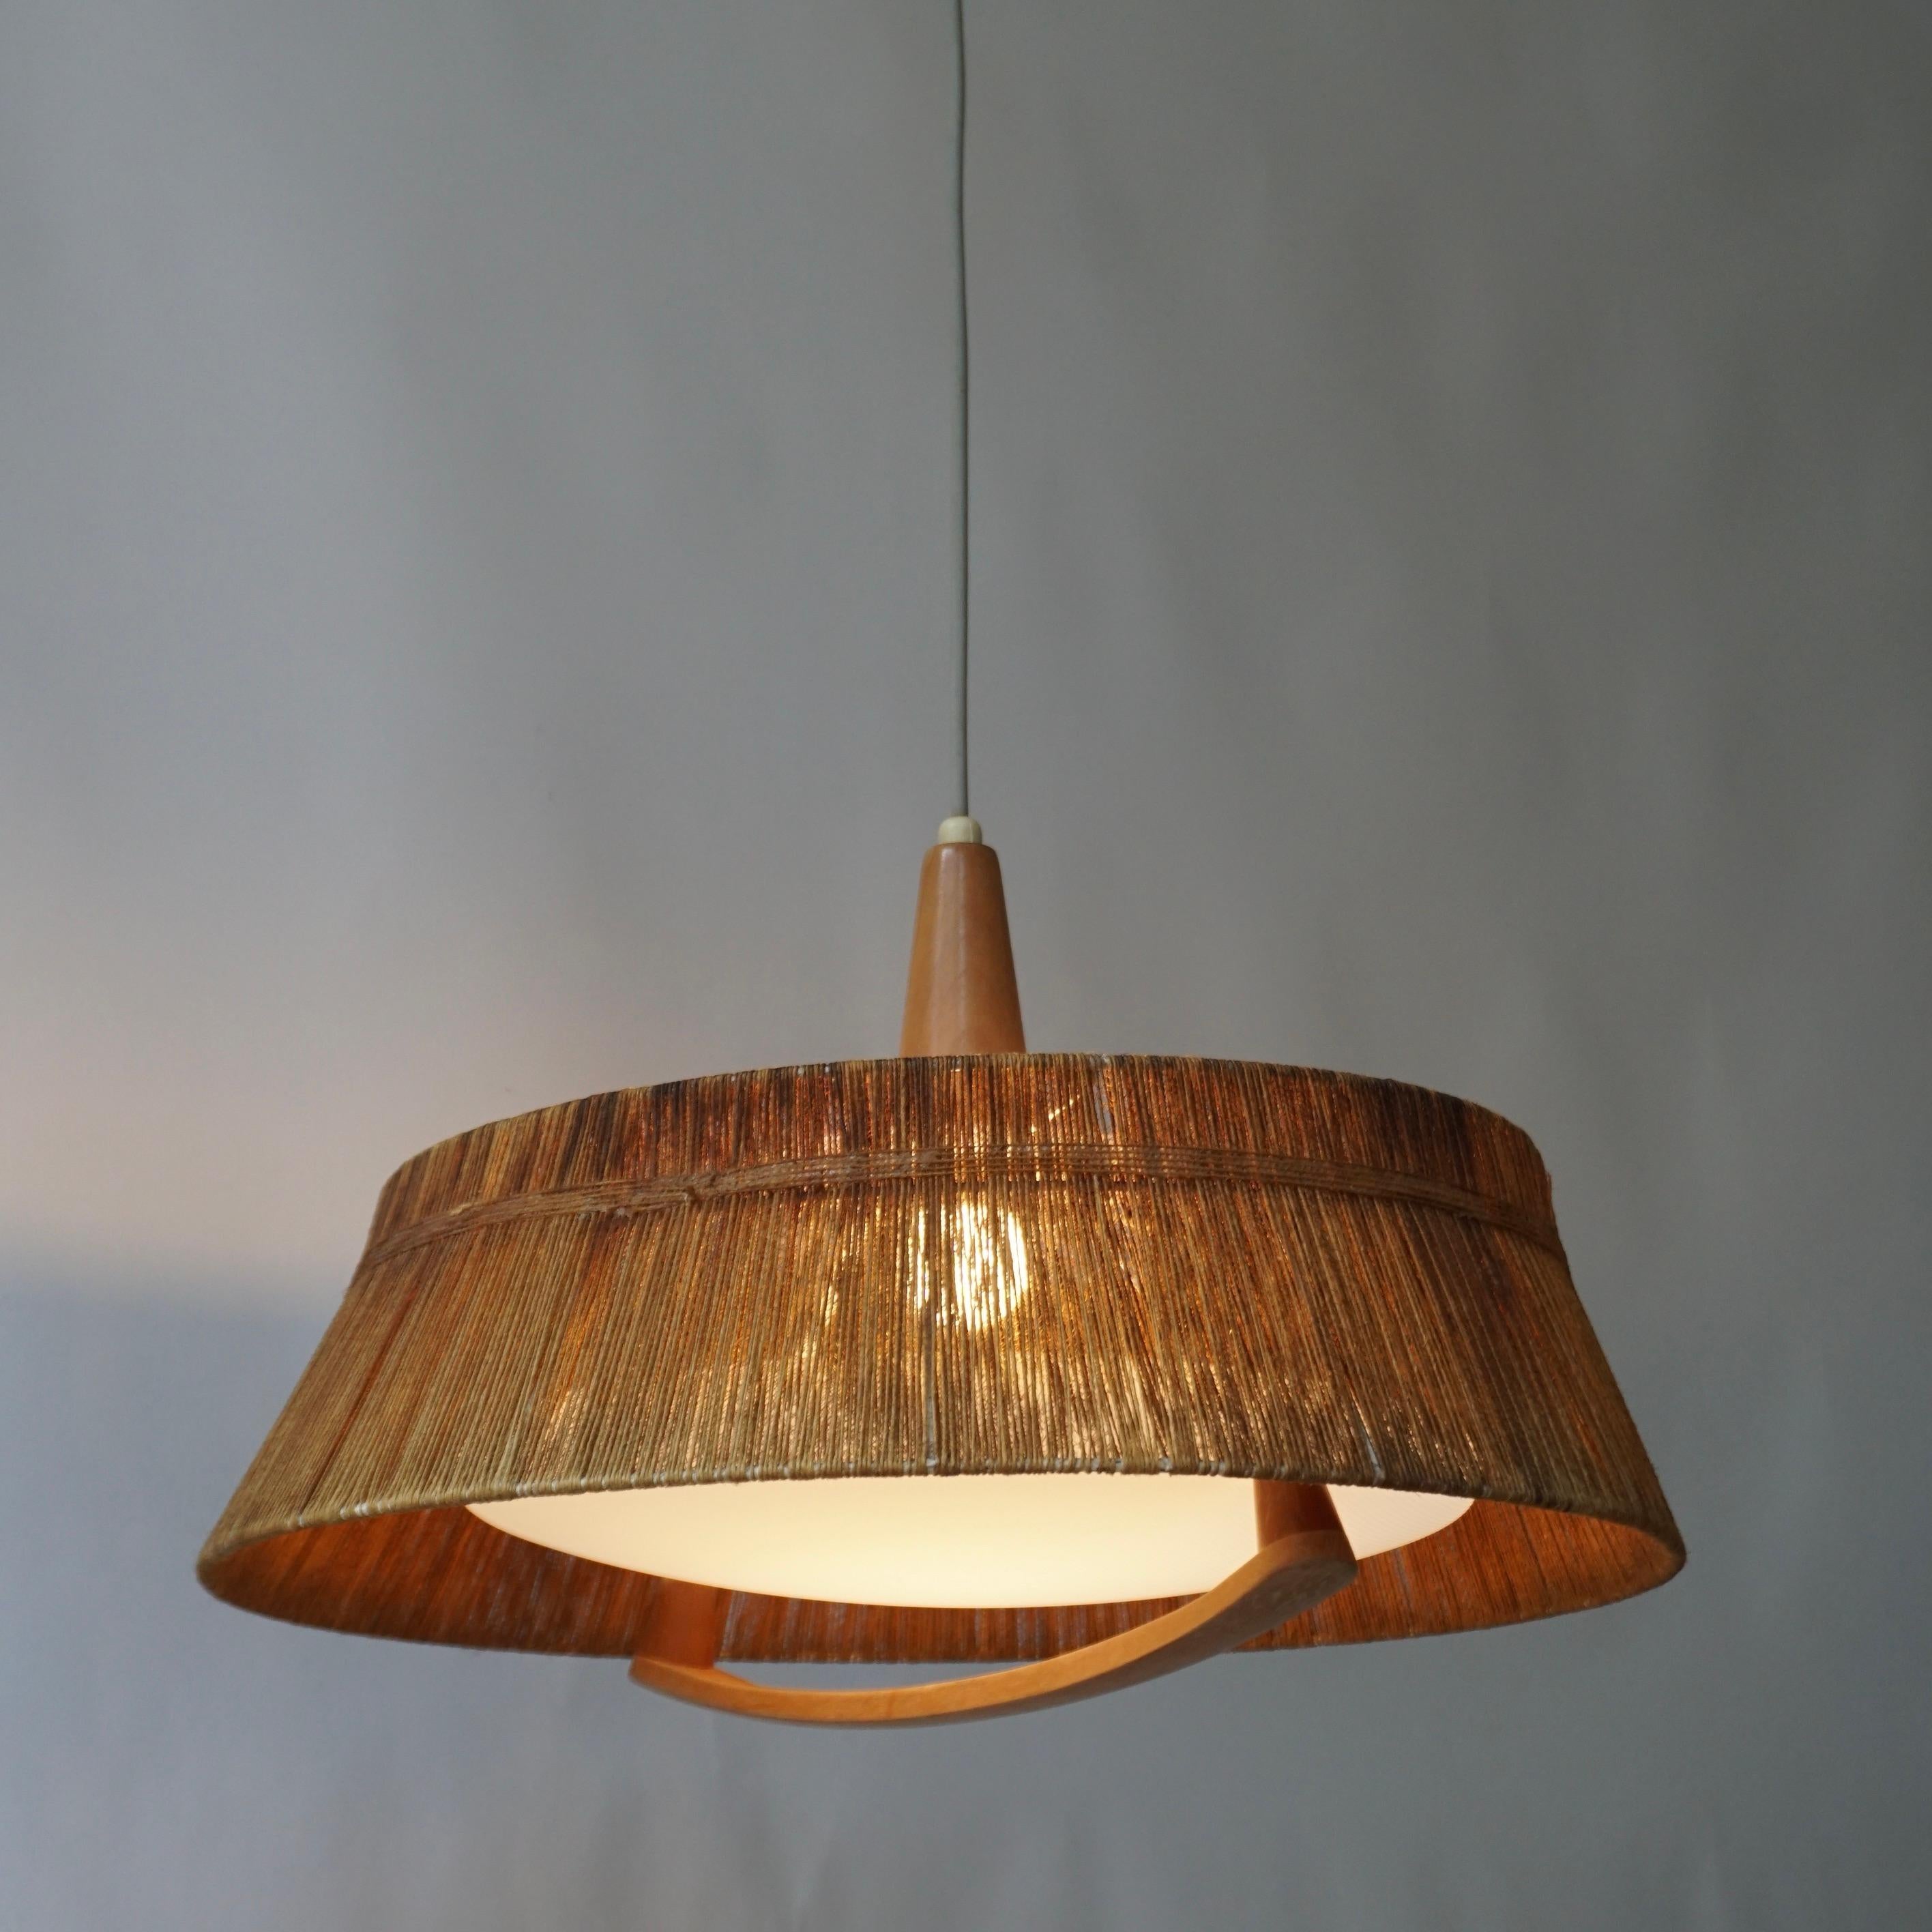 Danish Scandinavian Pendant Light in Rope, Wood and Perspex For Sale